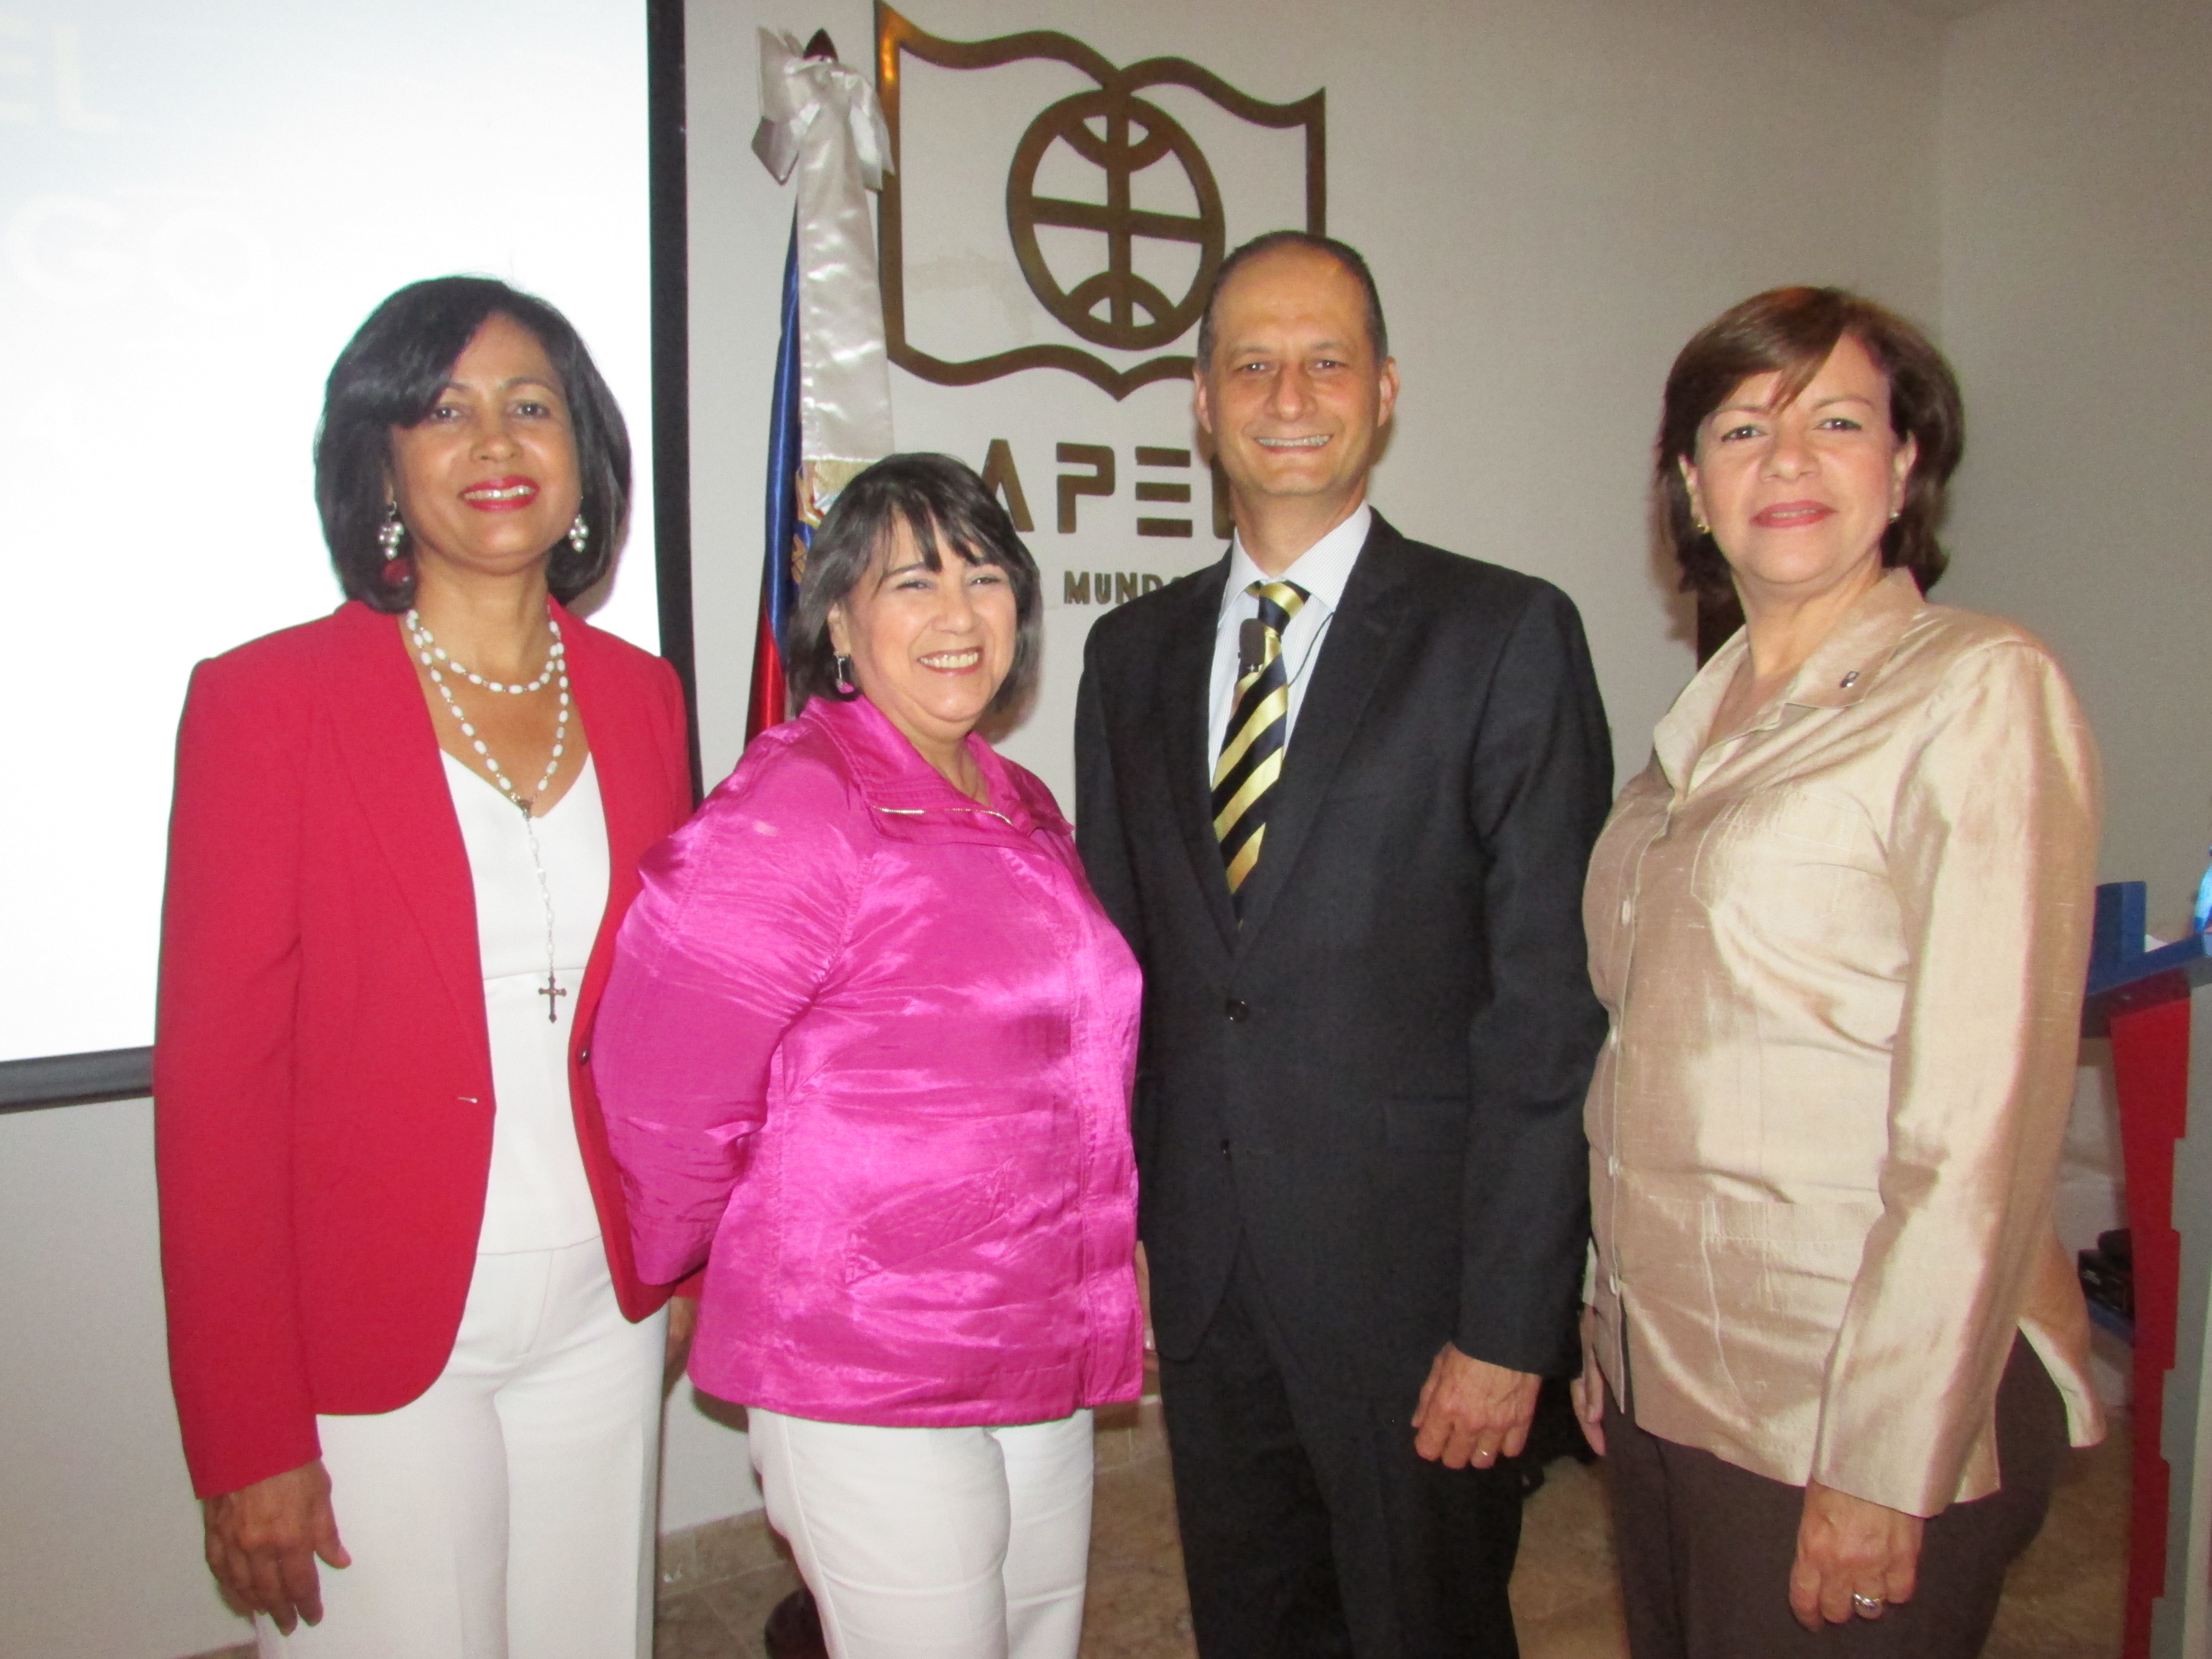 Mrisela Almánzar, Dalma Cruz Mirabal, Diego Sosa y María Isabel Sánchez.